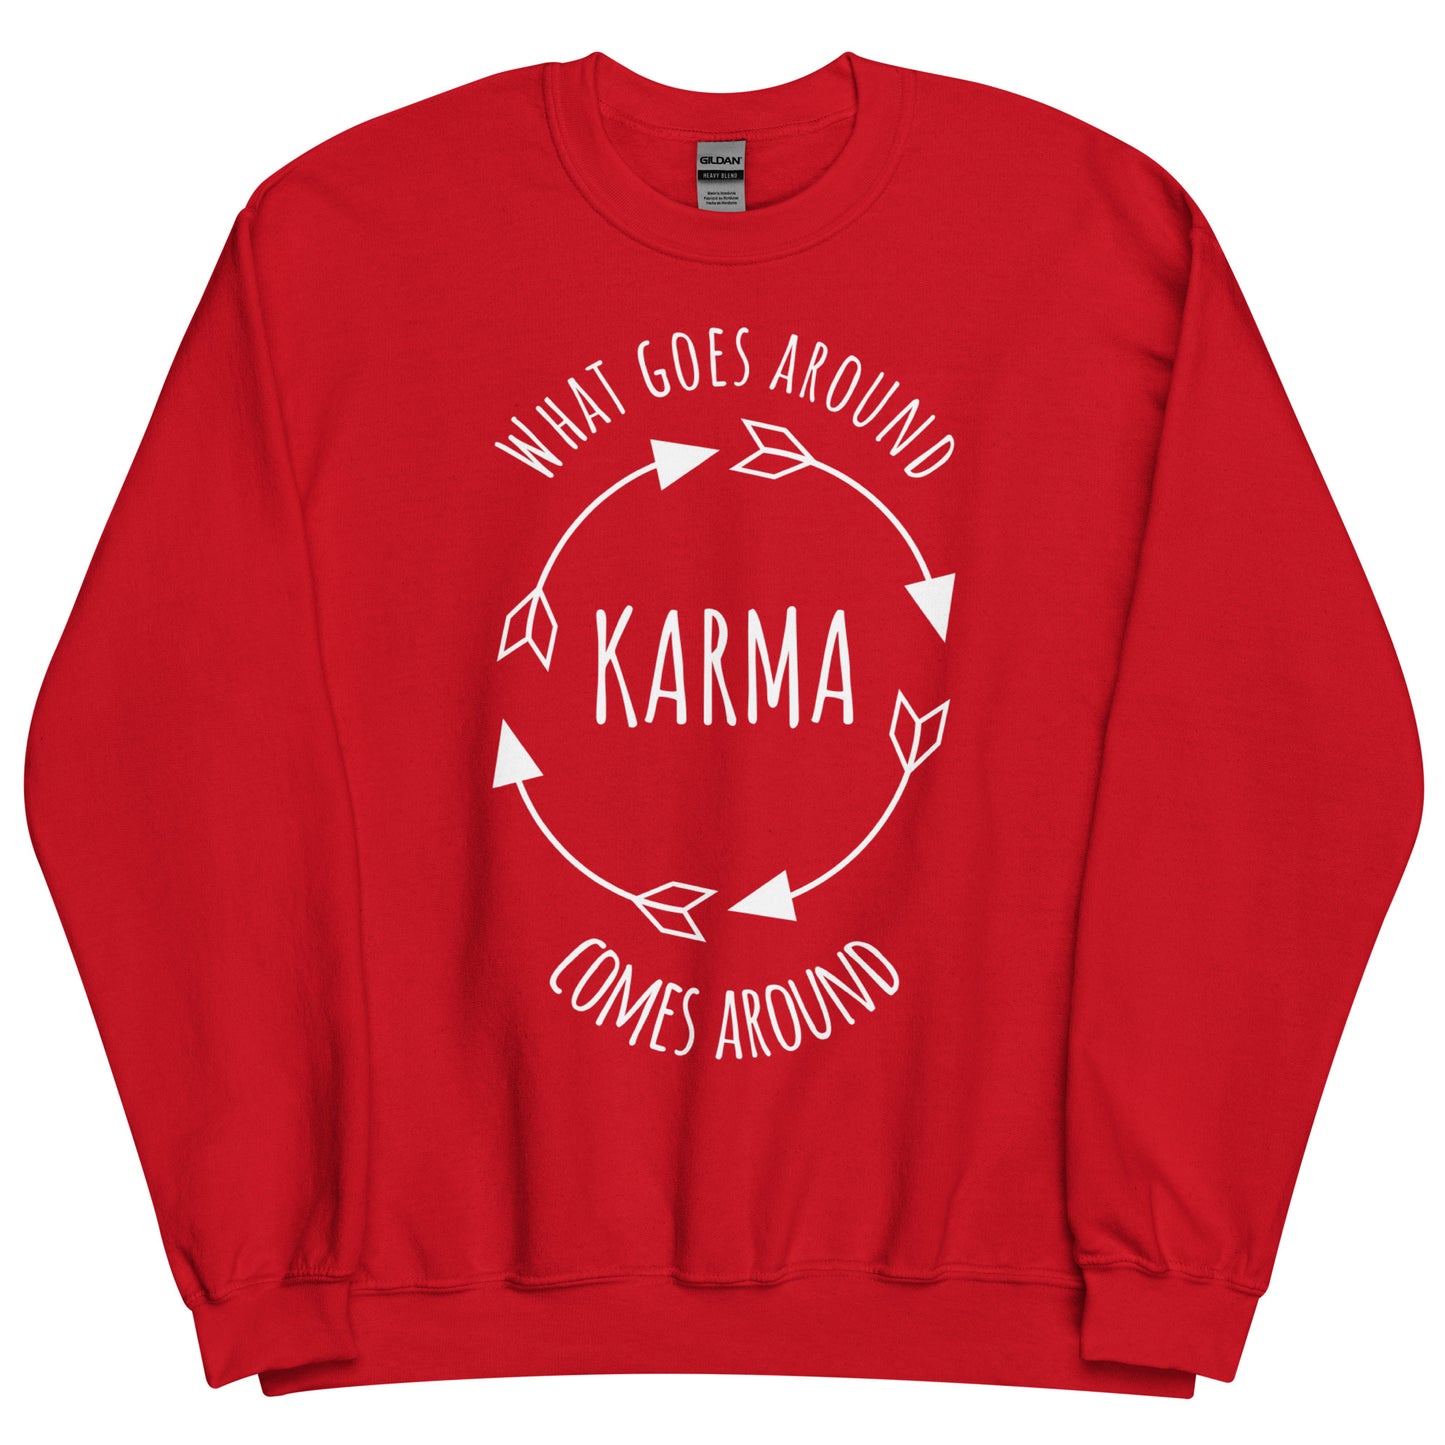 KARMA - what goes around comes around unisex crew neck sweatshirt (white lettering)